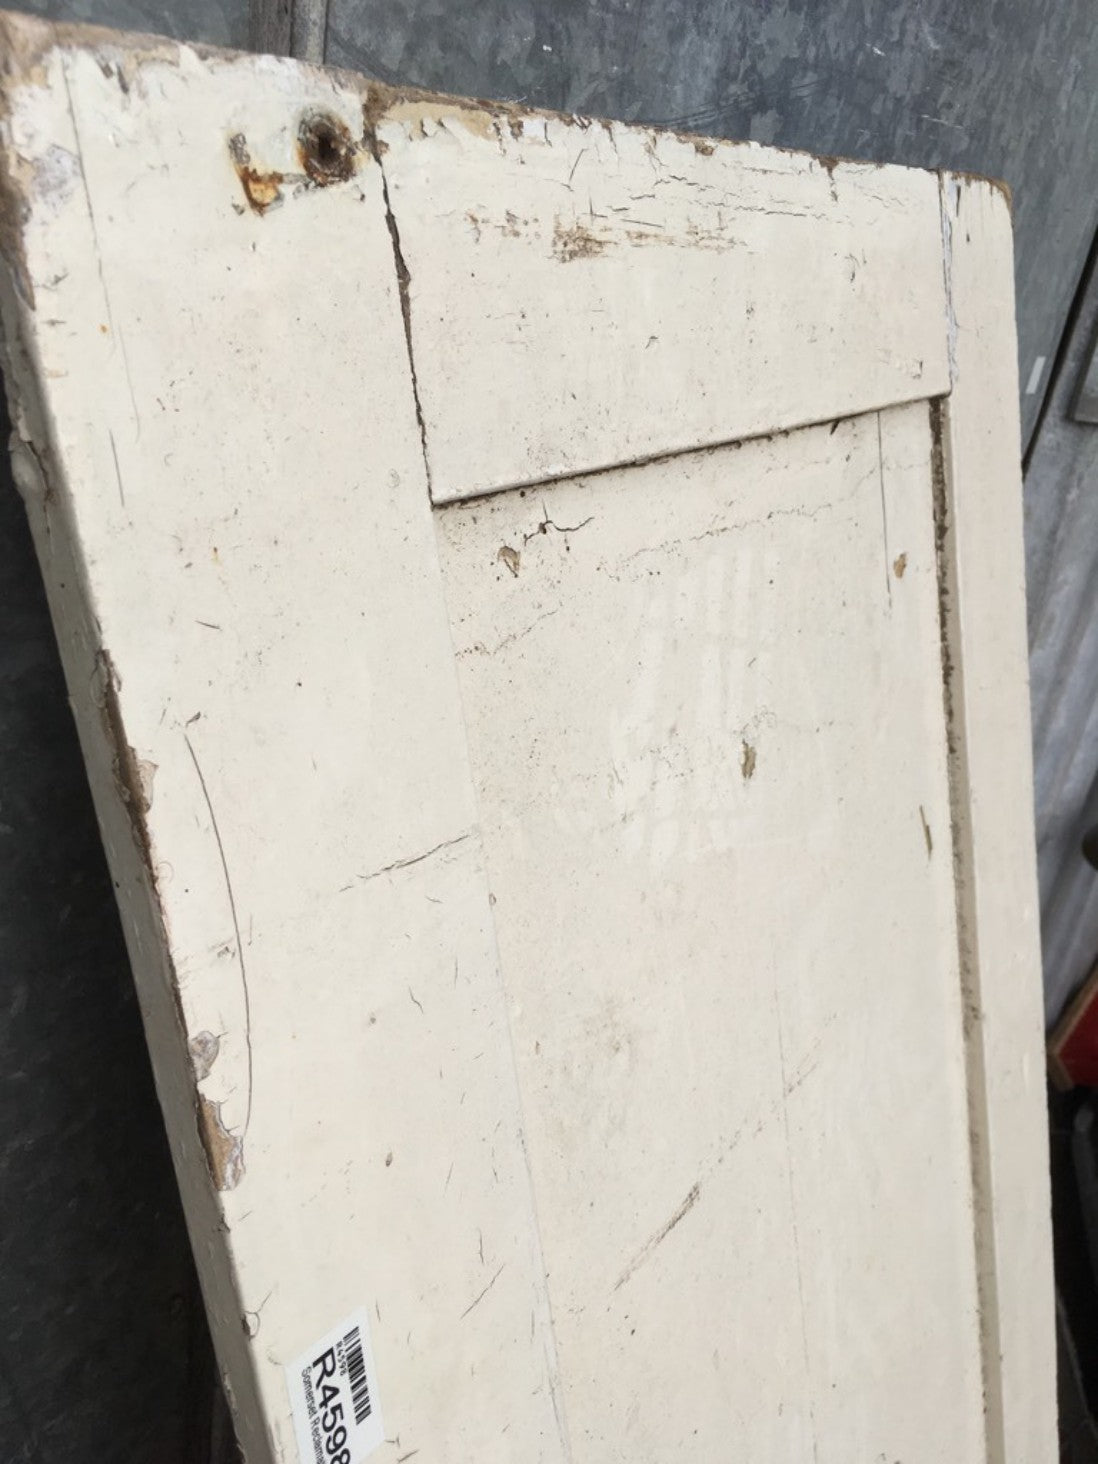 19 1/4”x71 5/8” Reclaimed Old Painted Pine Two Panel 1over1 Short Internal Door